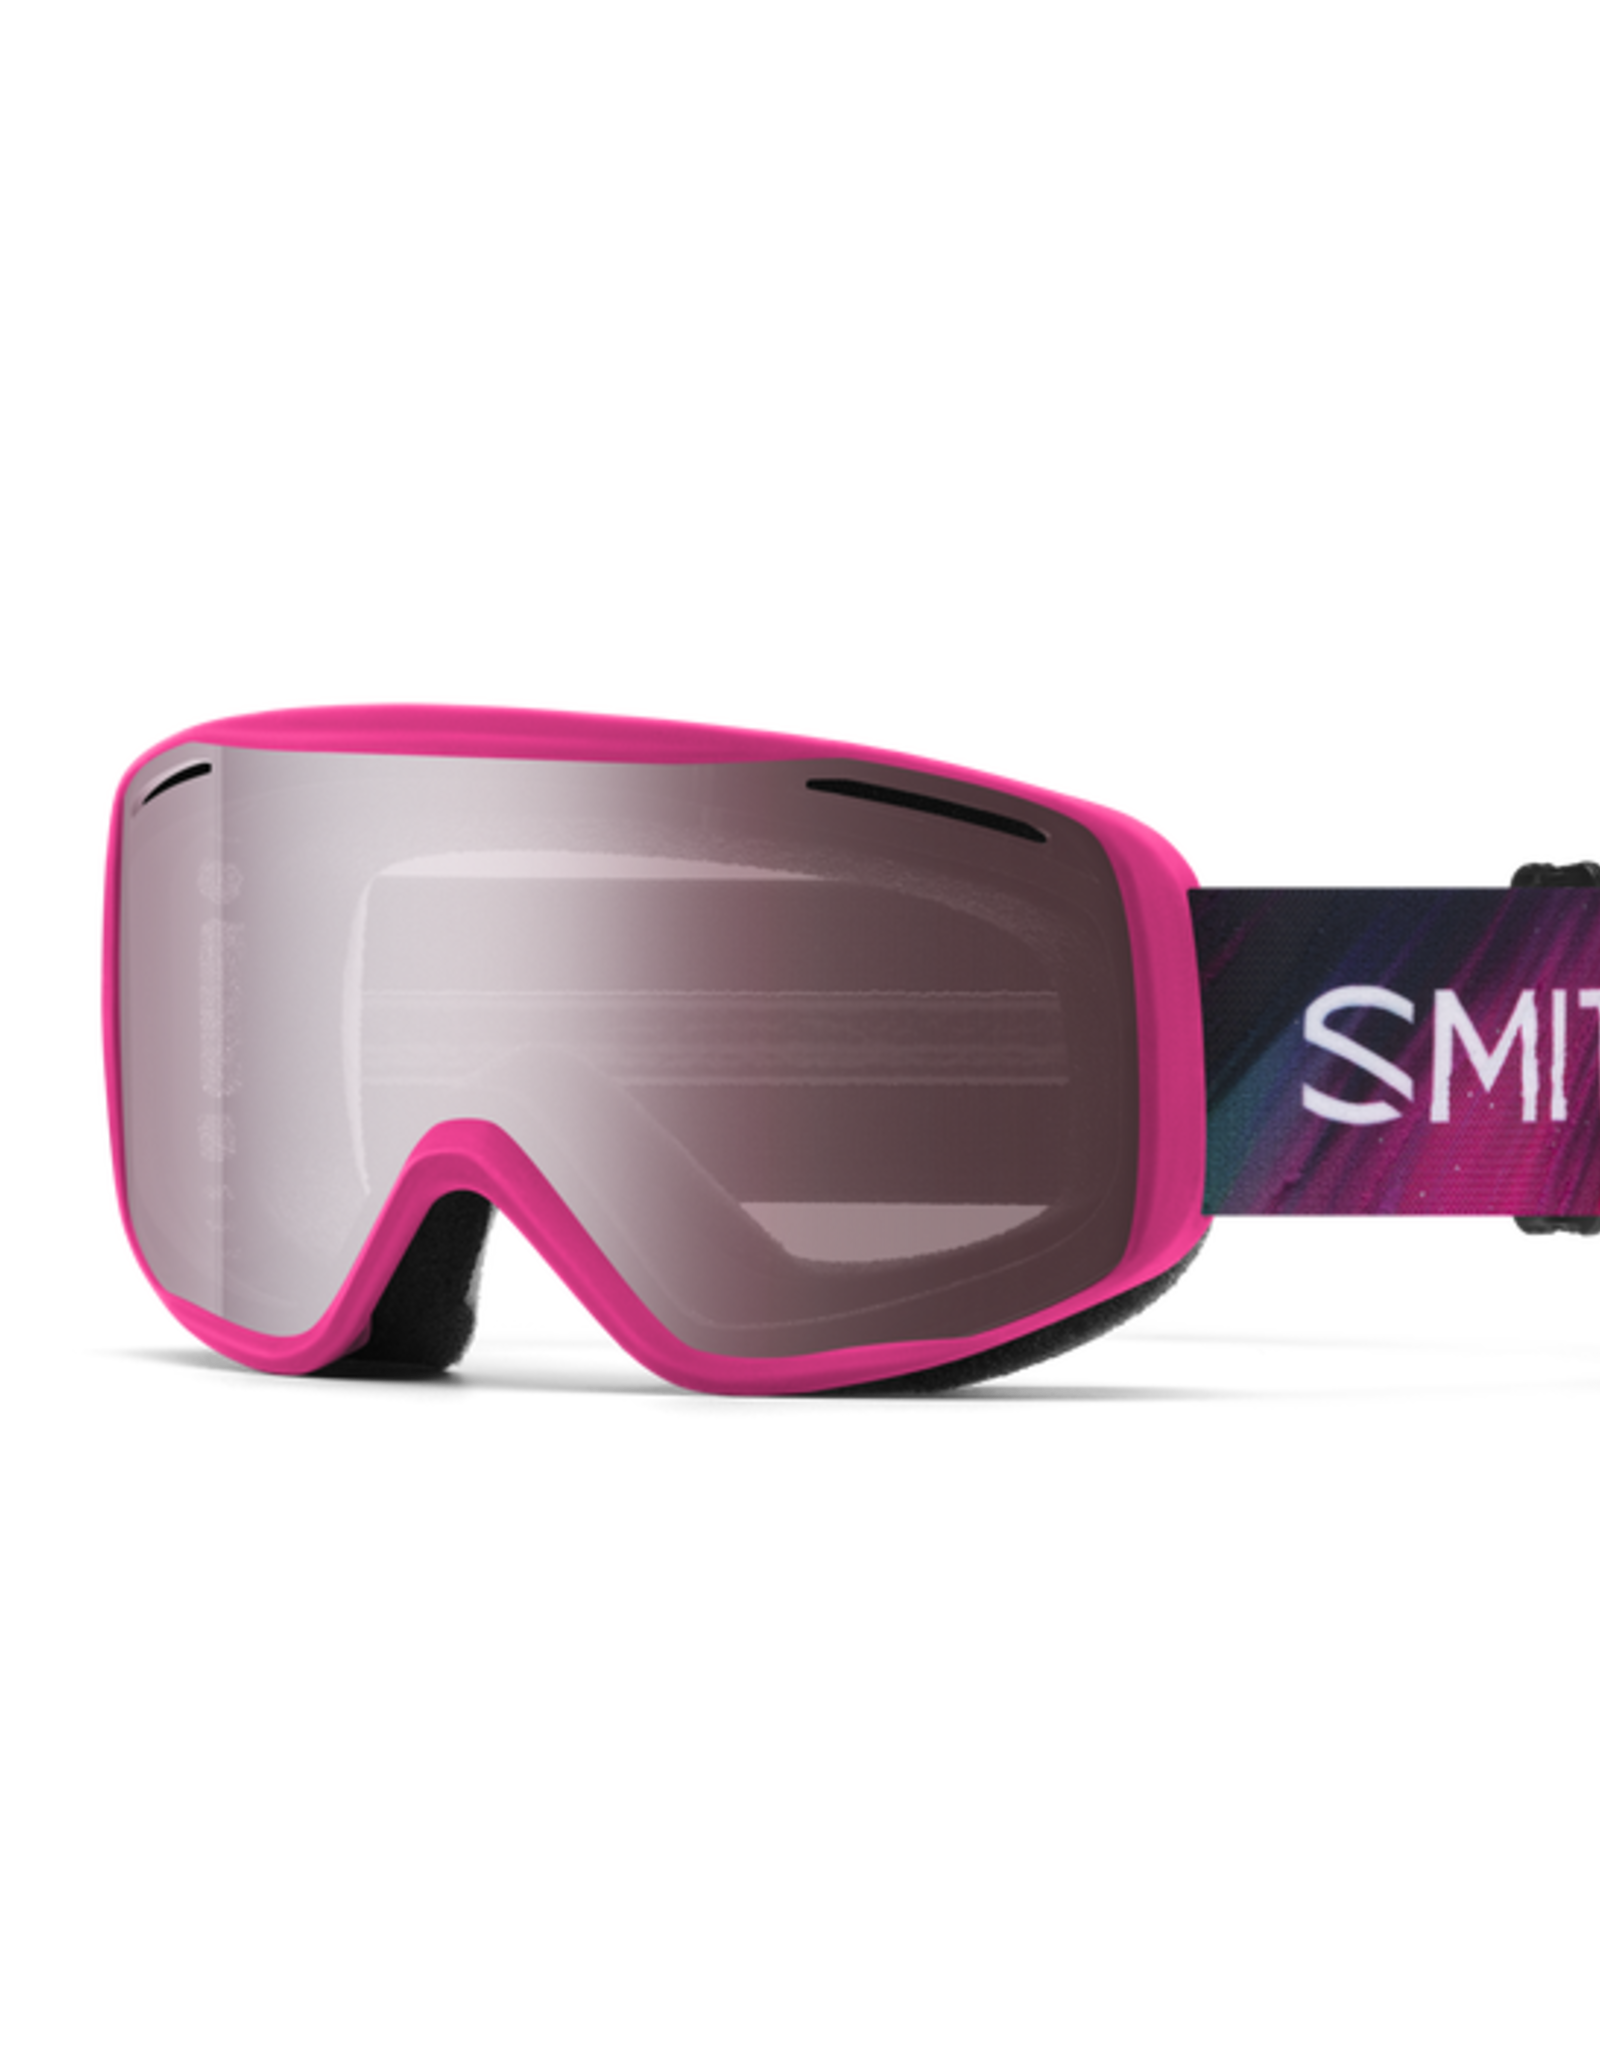 SMITH Smith Rally Lectric Flamingo Supernova w Ignitor Mirror lens